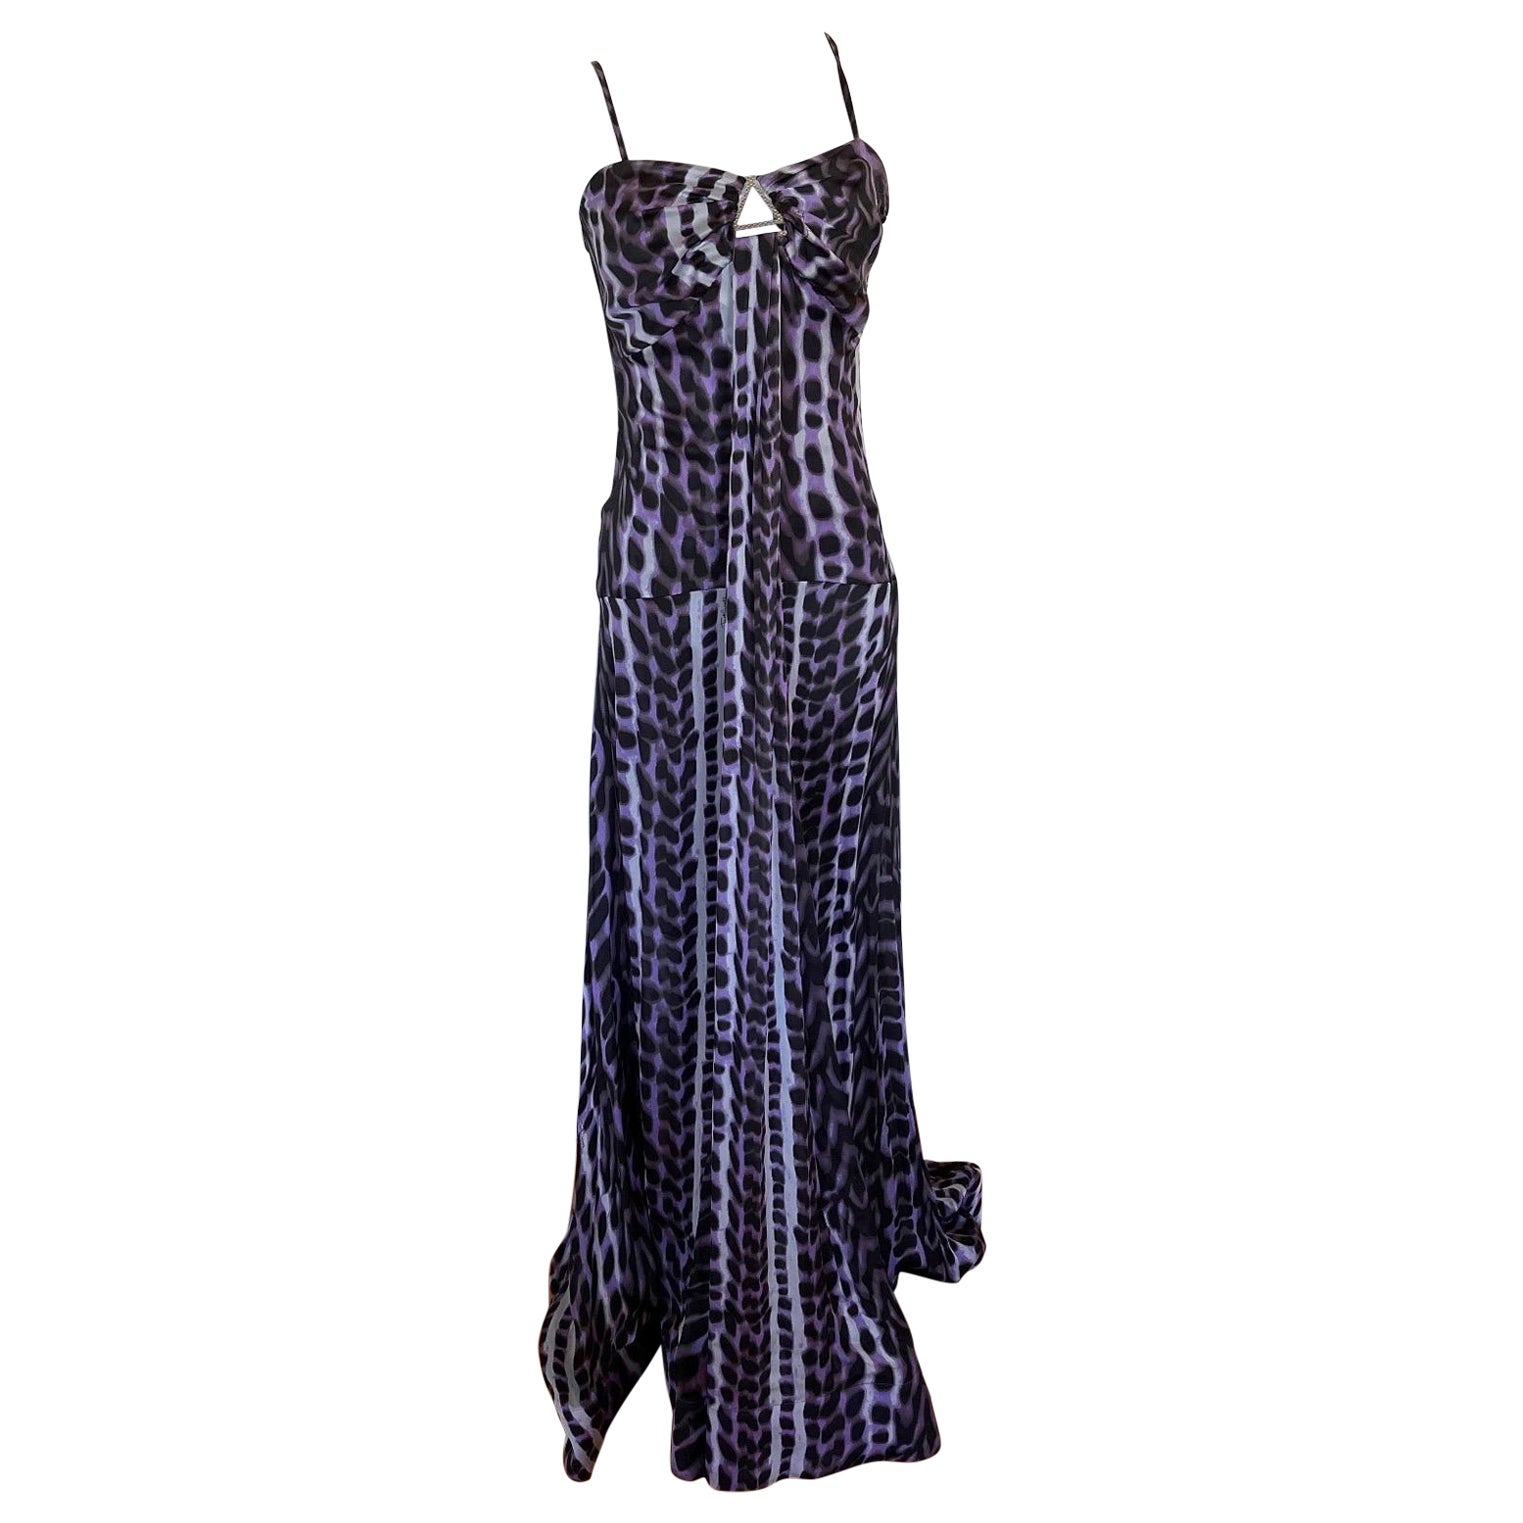 Roberto Cavalli for Just Cavalli Zebra Print Corset Dress For Sale at